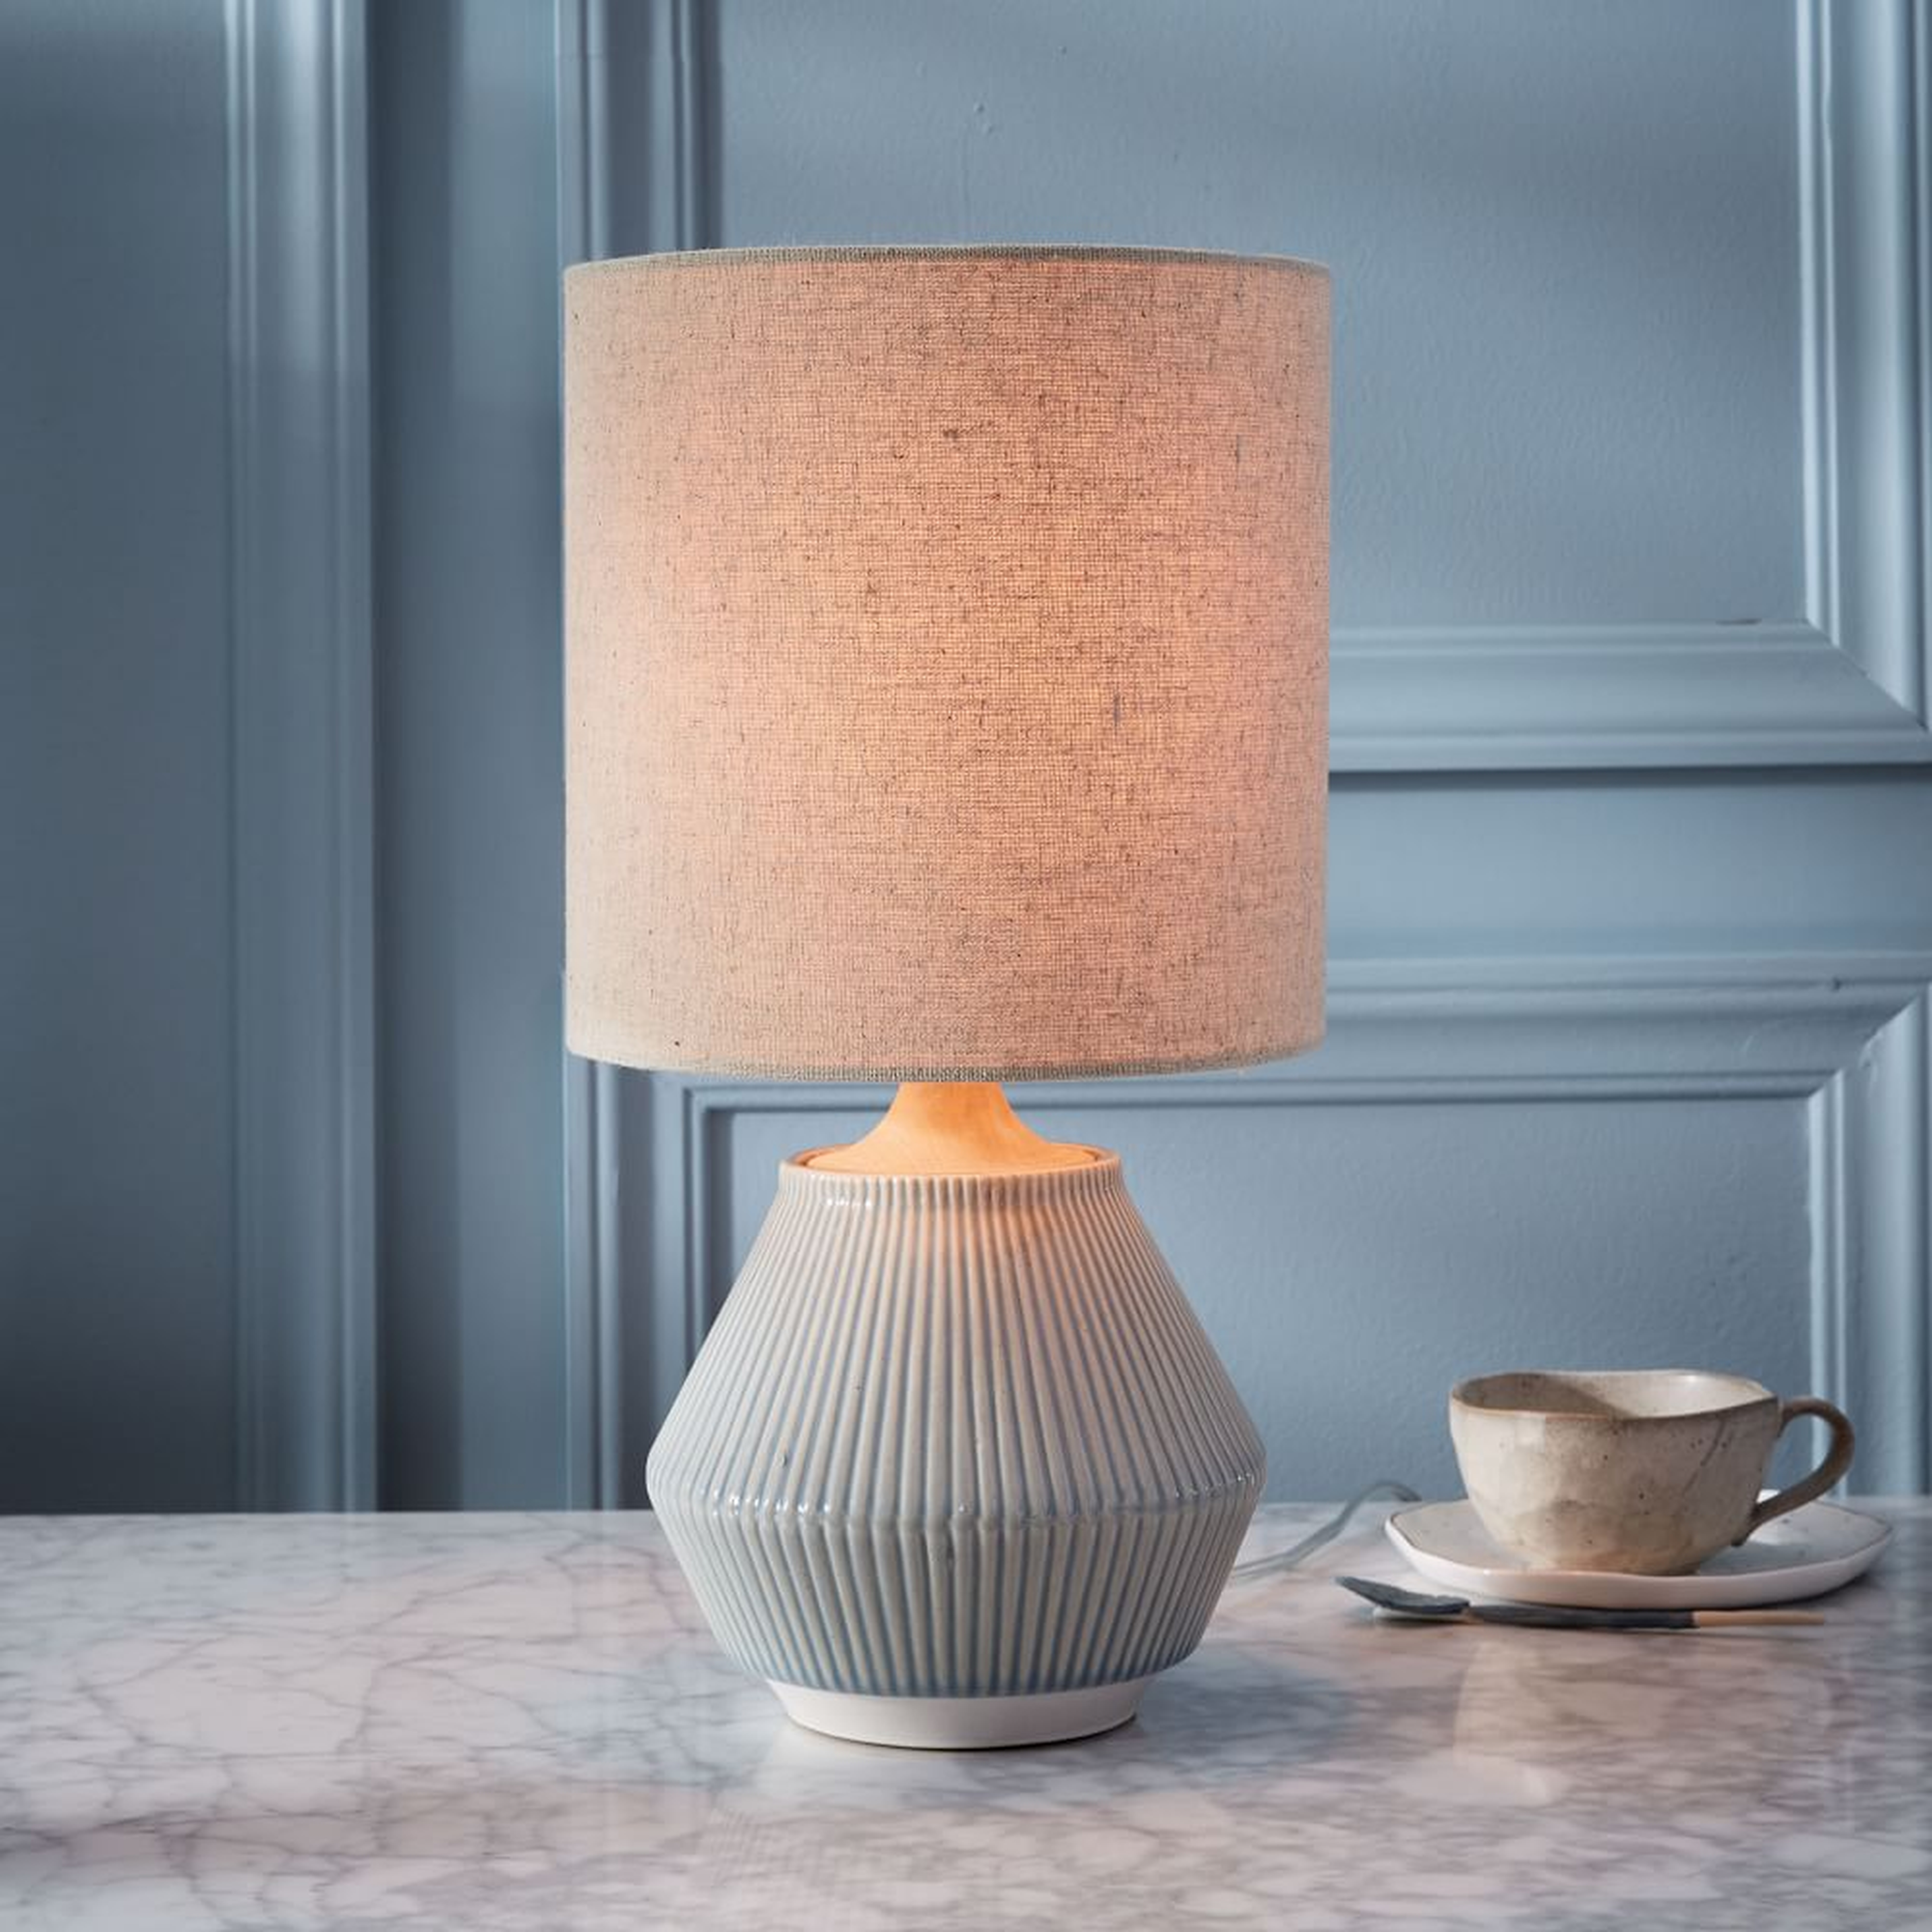 Roar + Rabbit Ceramic Table Lamp, Cool Gray, Short - West Elm